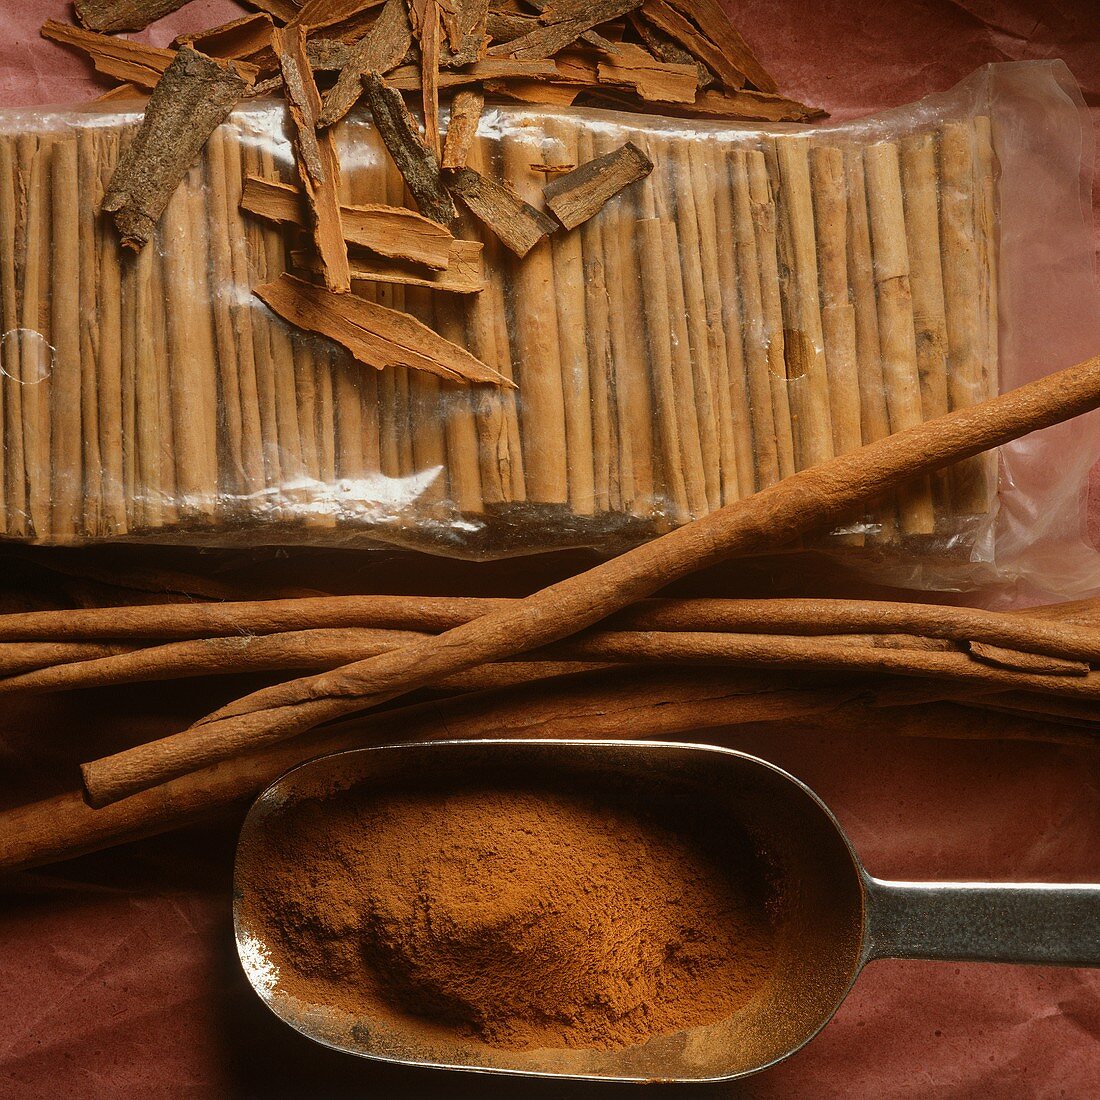 Cinnamon powder, bark and sticks